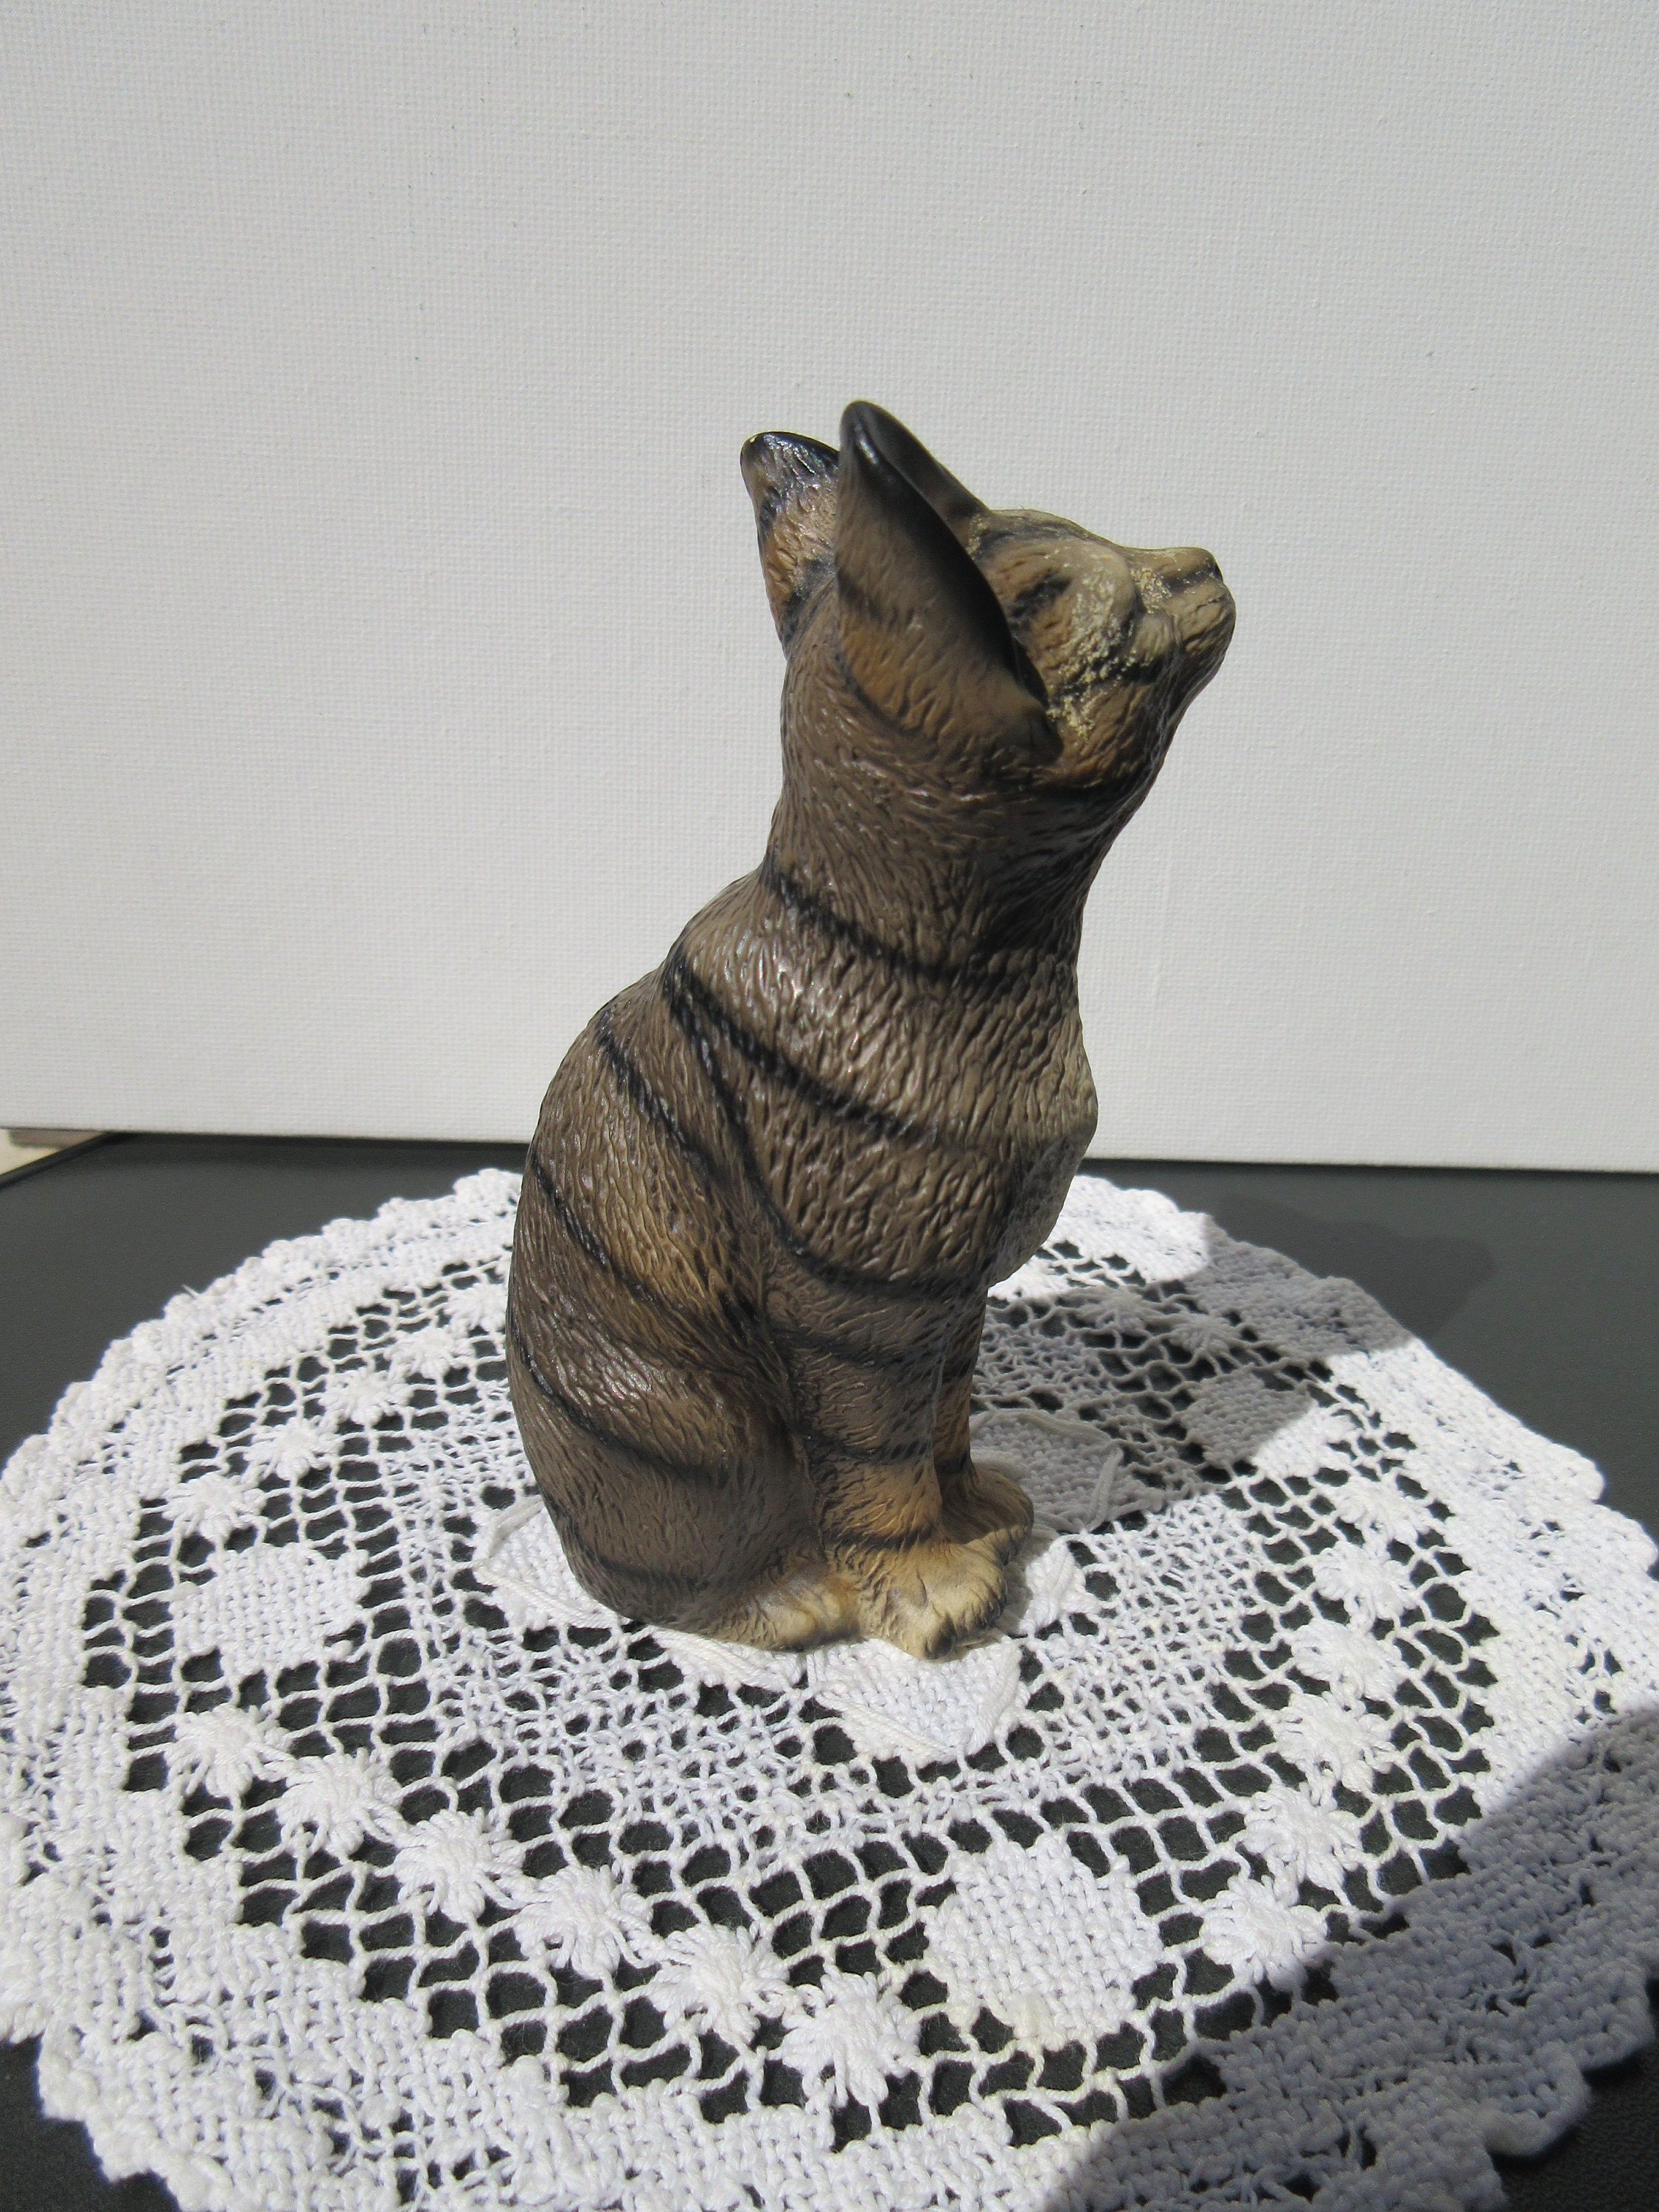 JK Kitten Paws on Leaf ceramic figurine. 4 inches. JK X013A